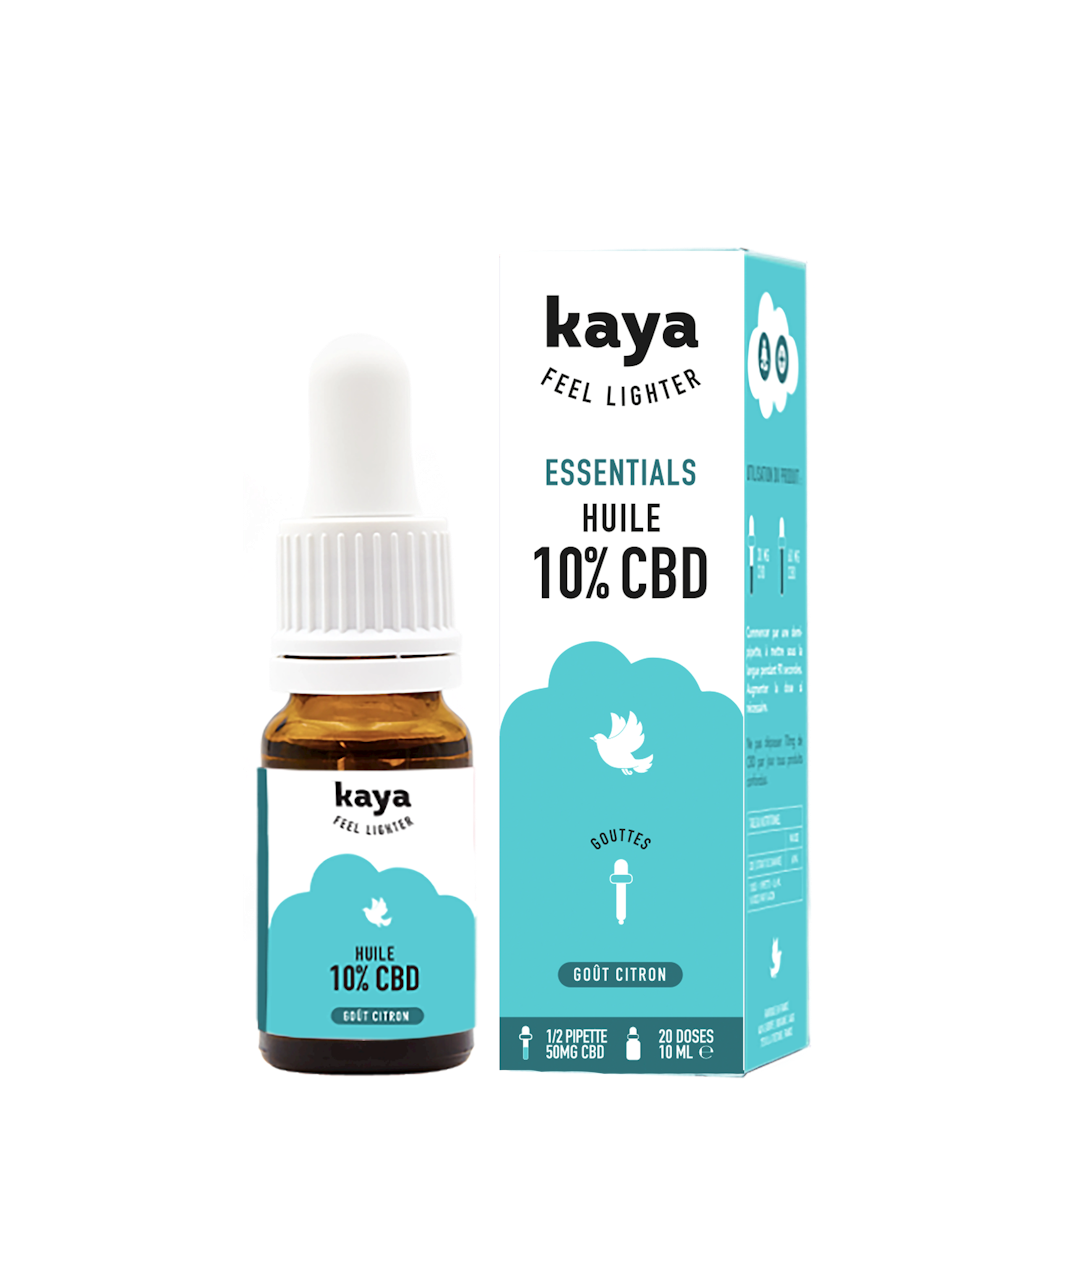 Kaya essentials 10% CBD